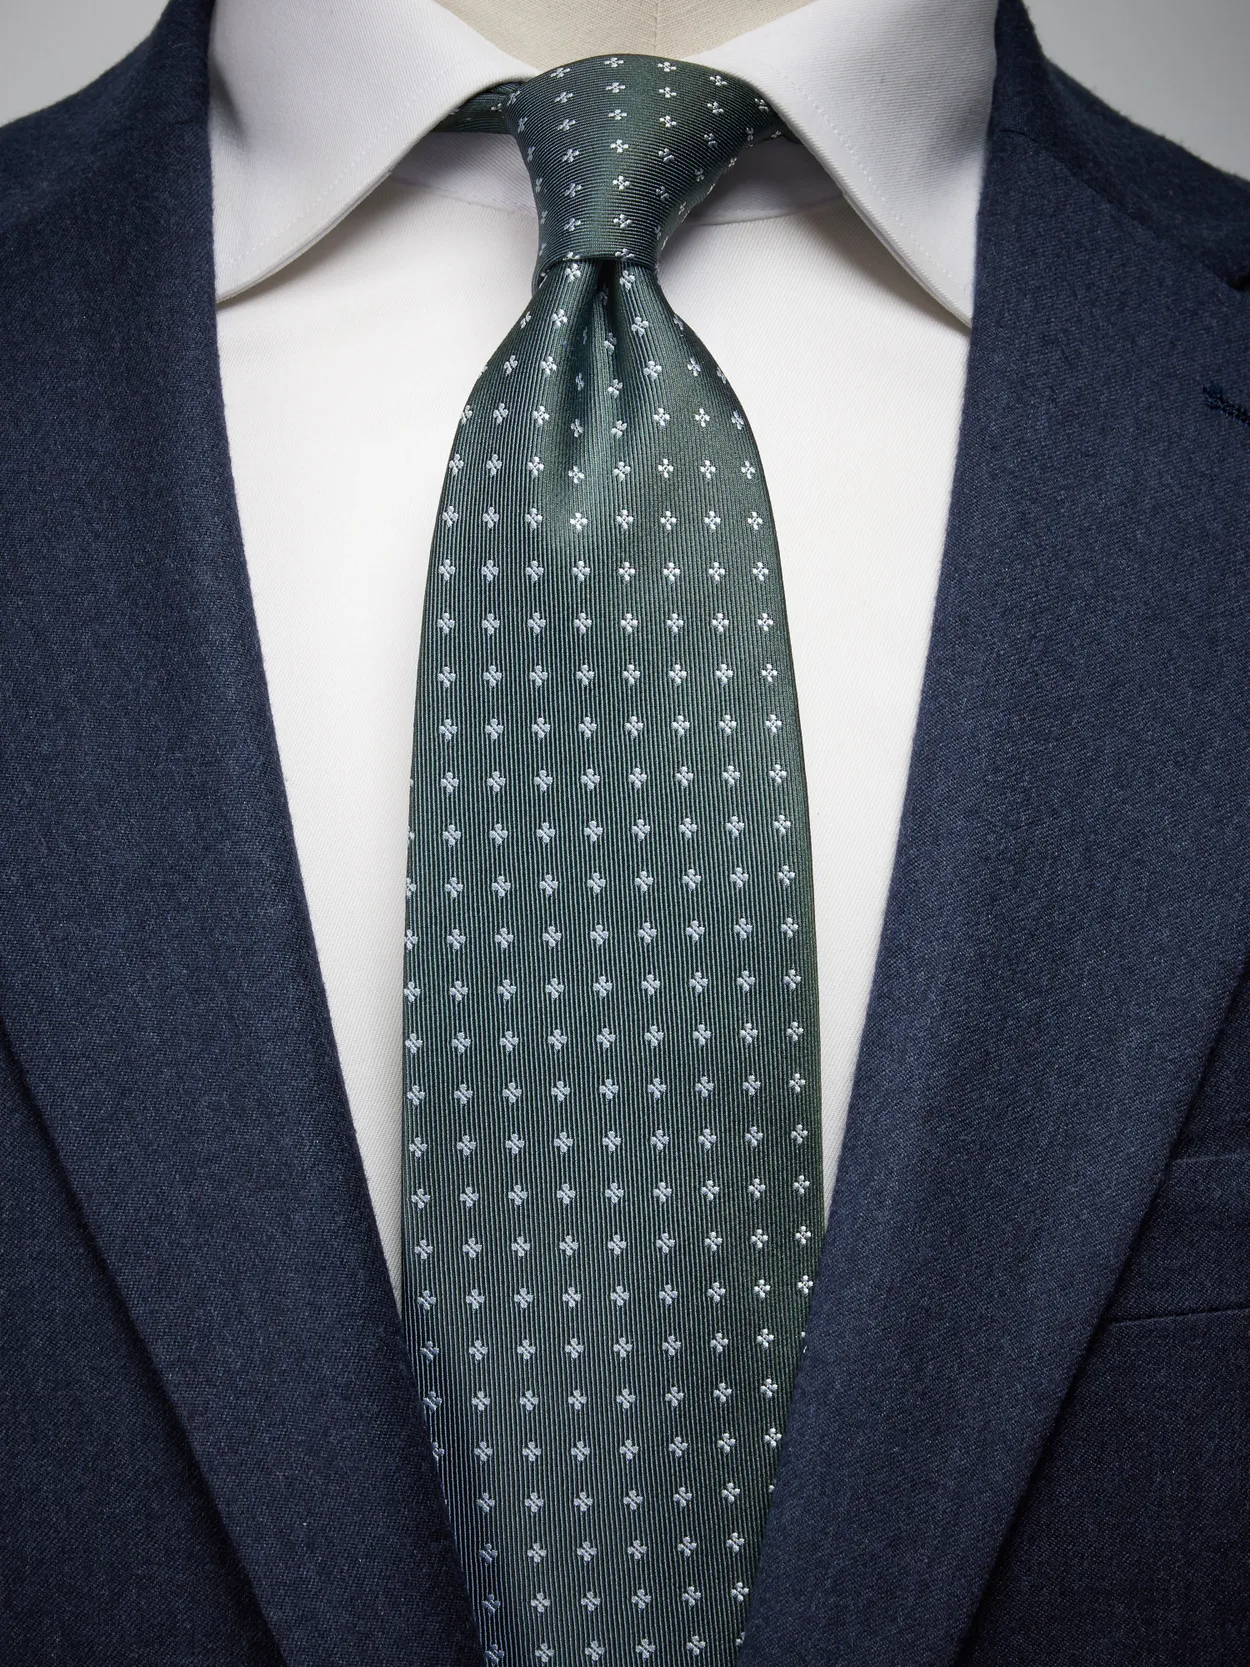 Olive Green Tie Floral